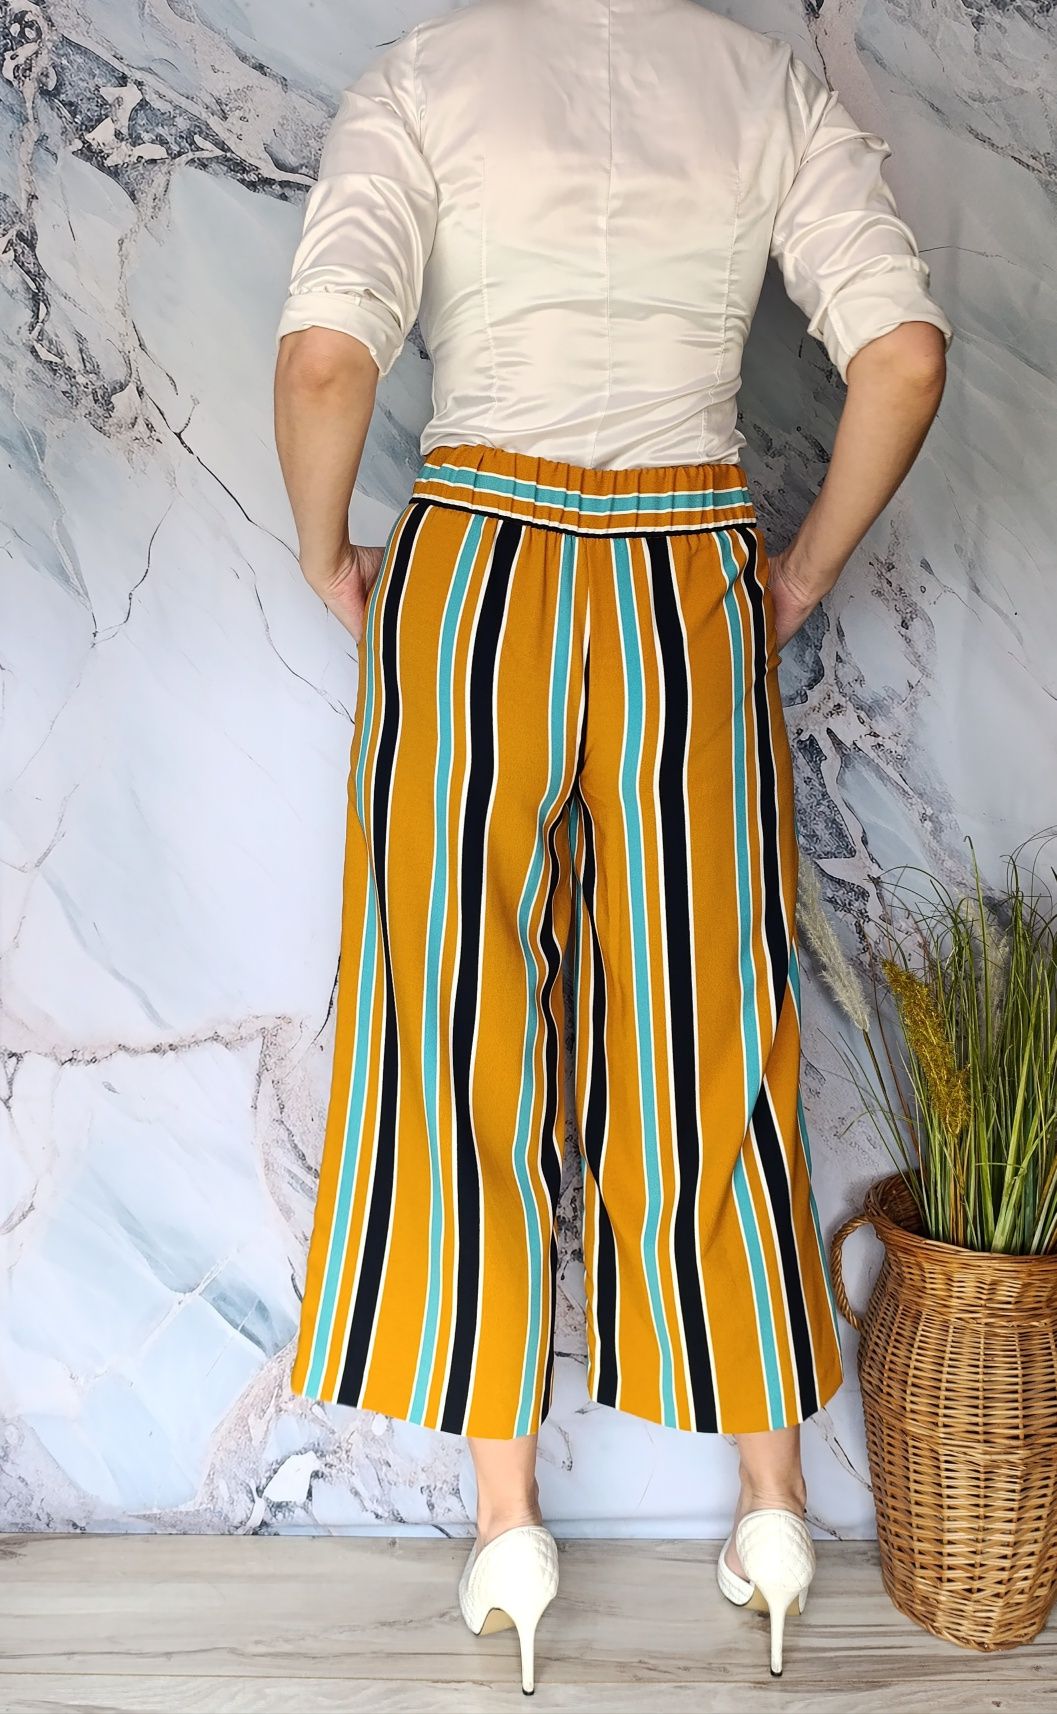 Cudne lekkie szerokie spodnie paski wiosna lato Zara musthave